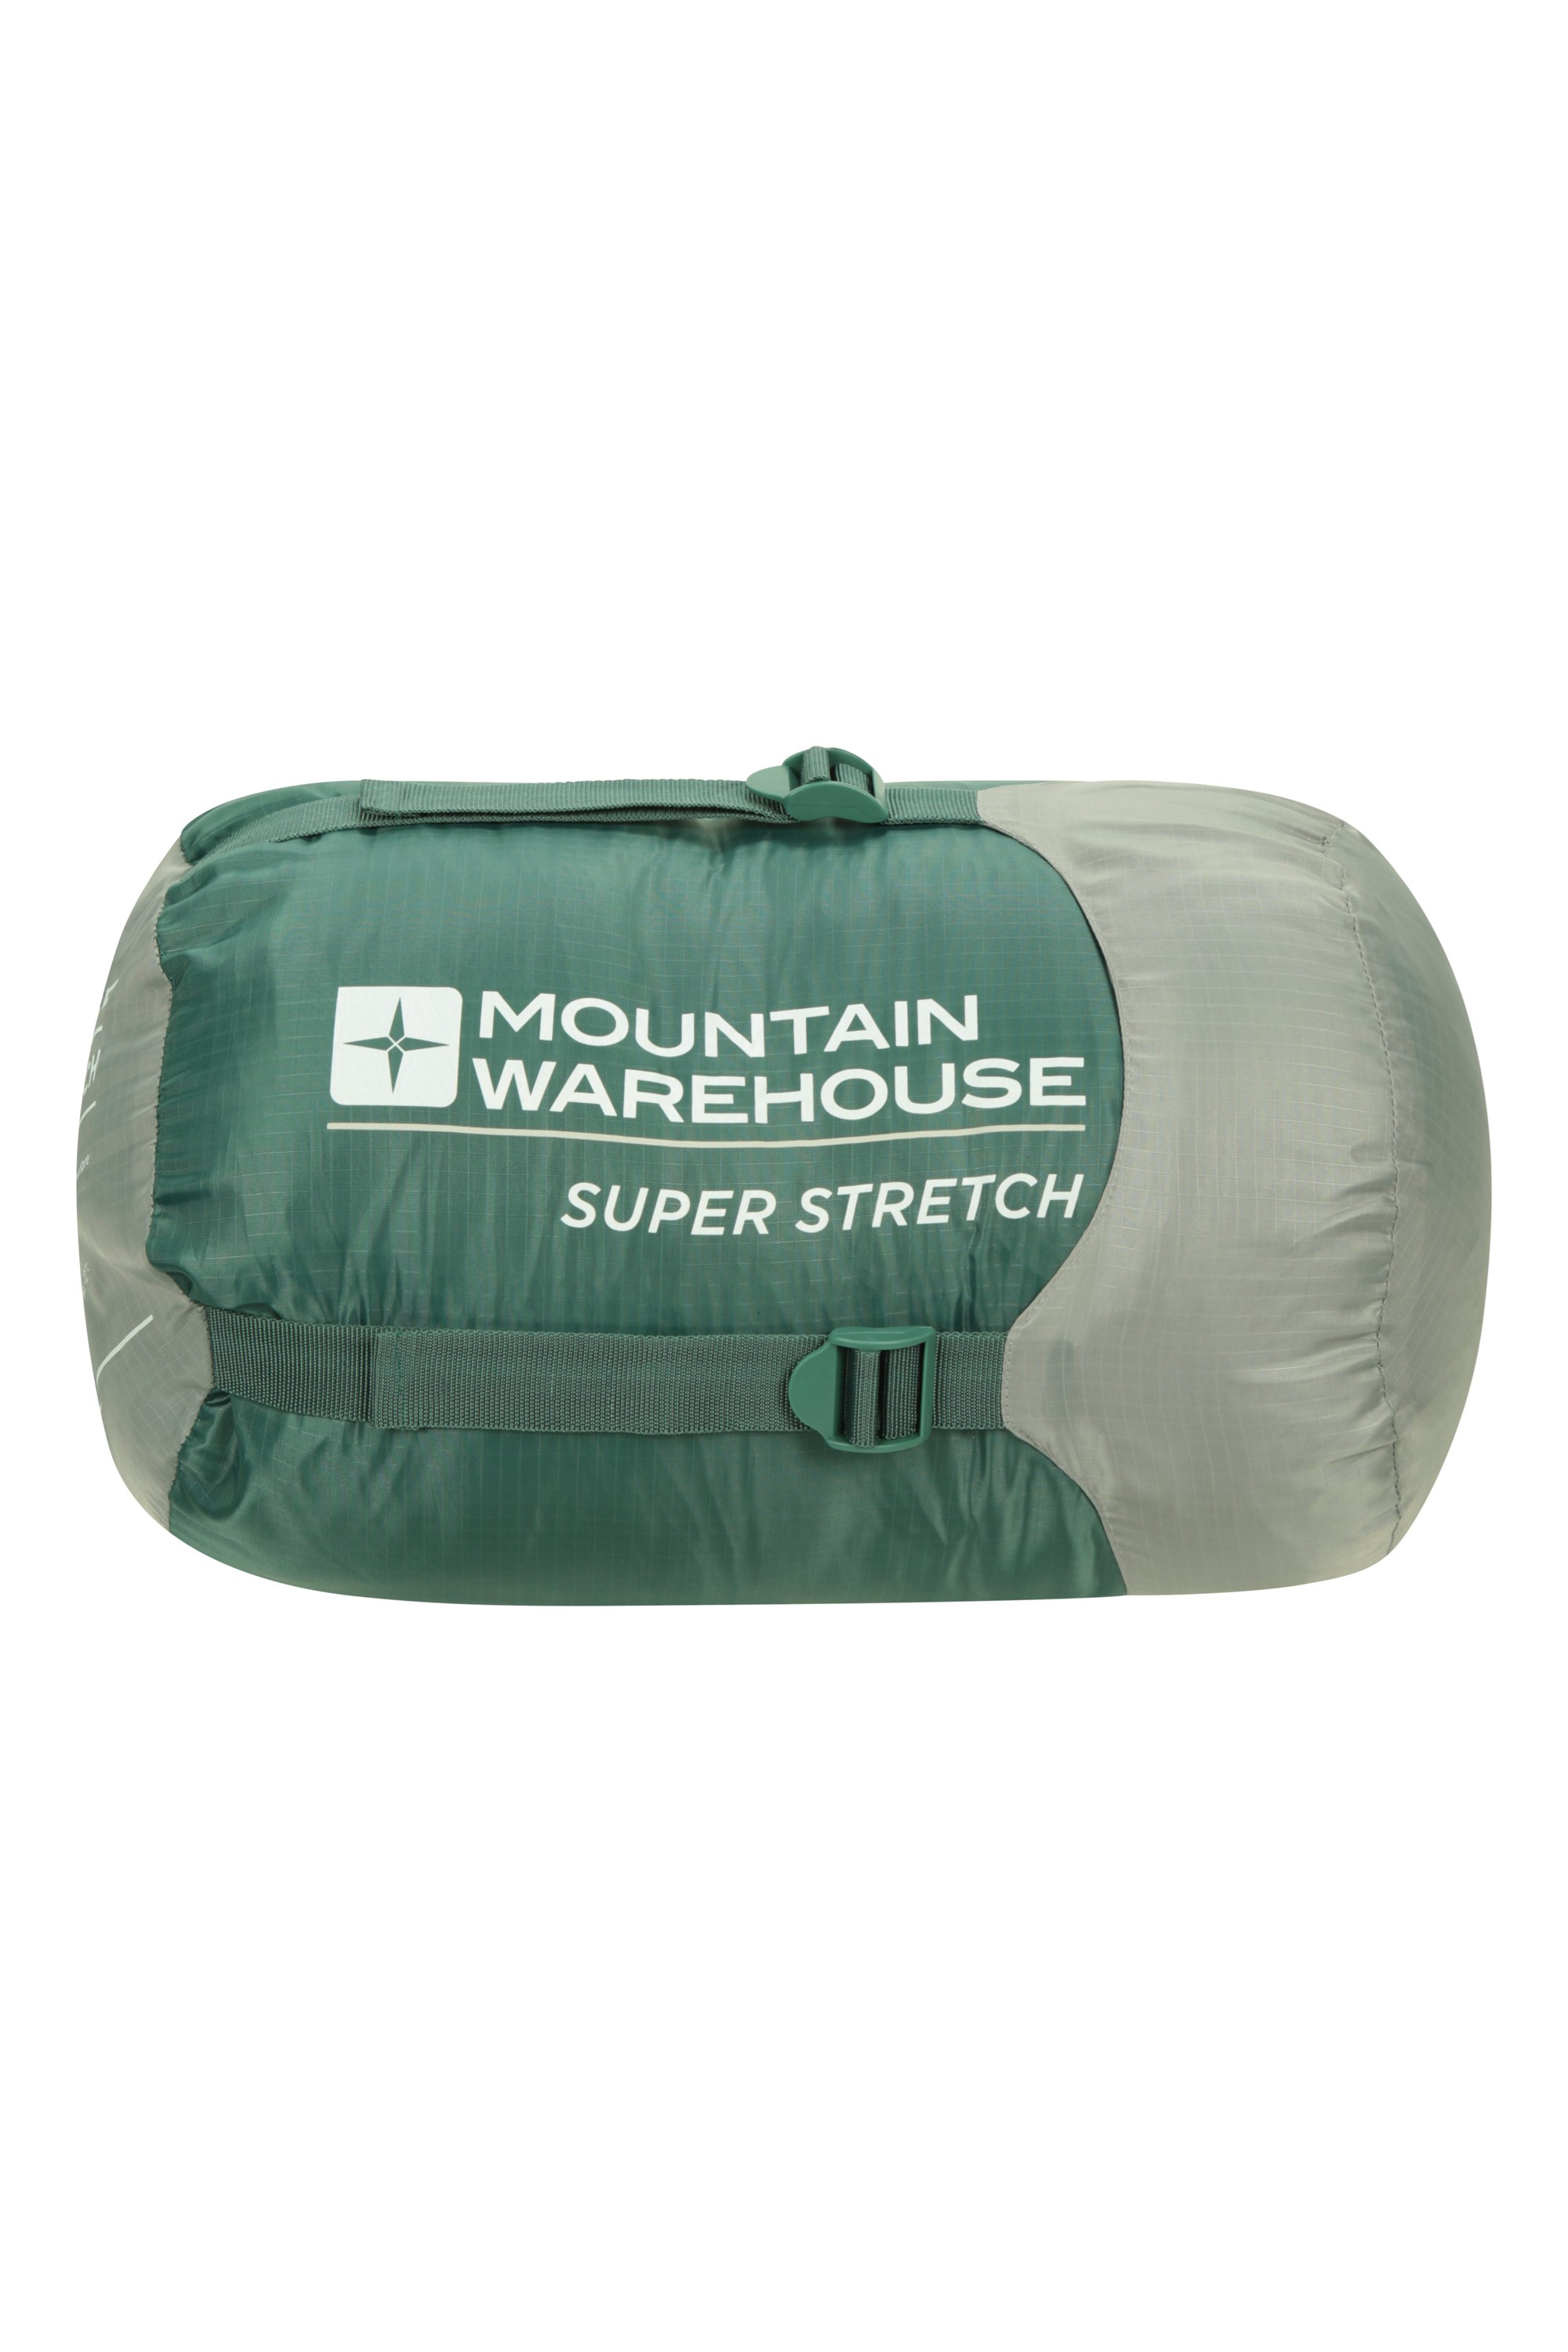 Super Stretch Summer Sleeping Bag